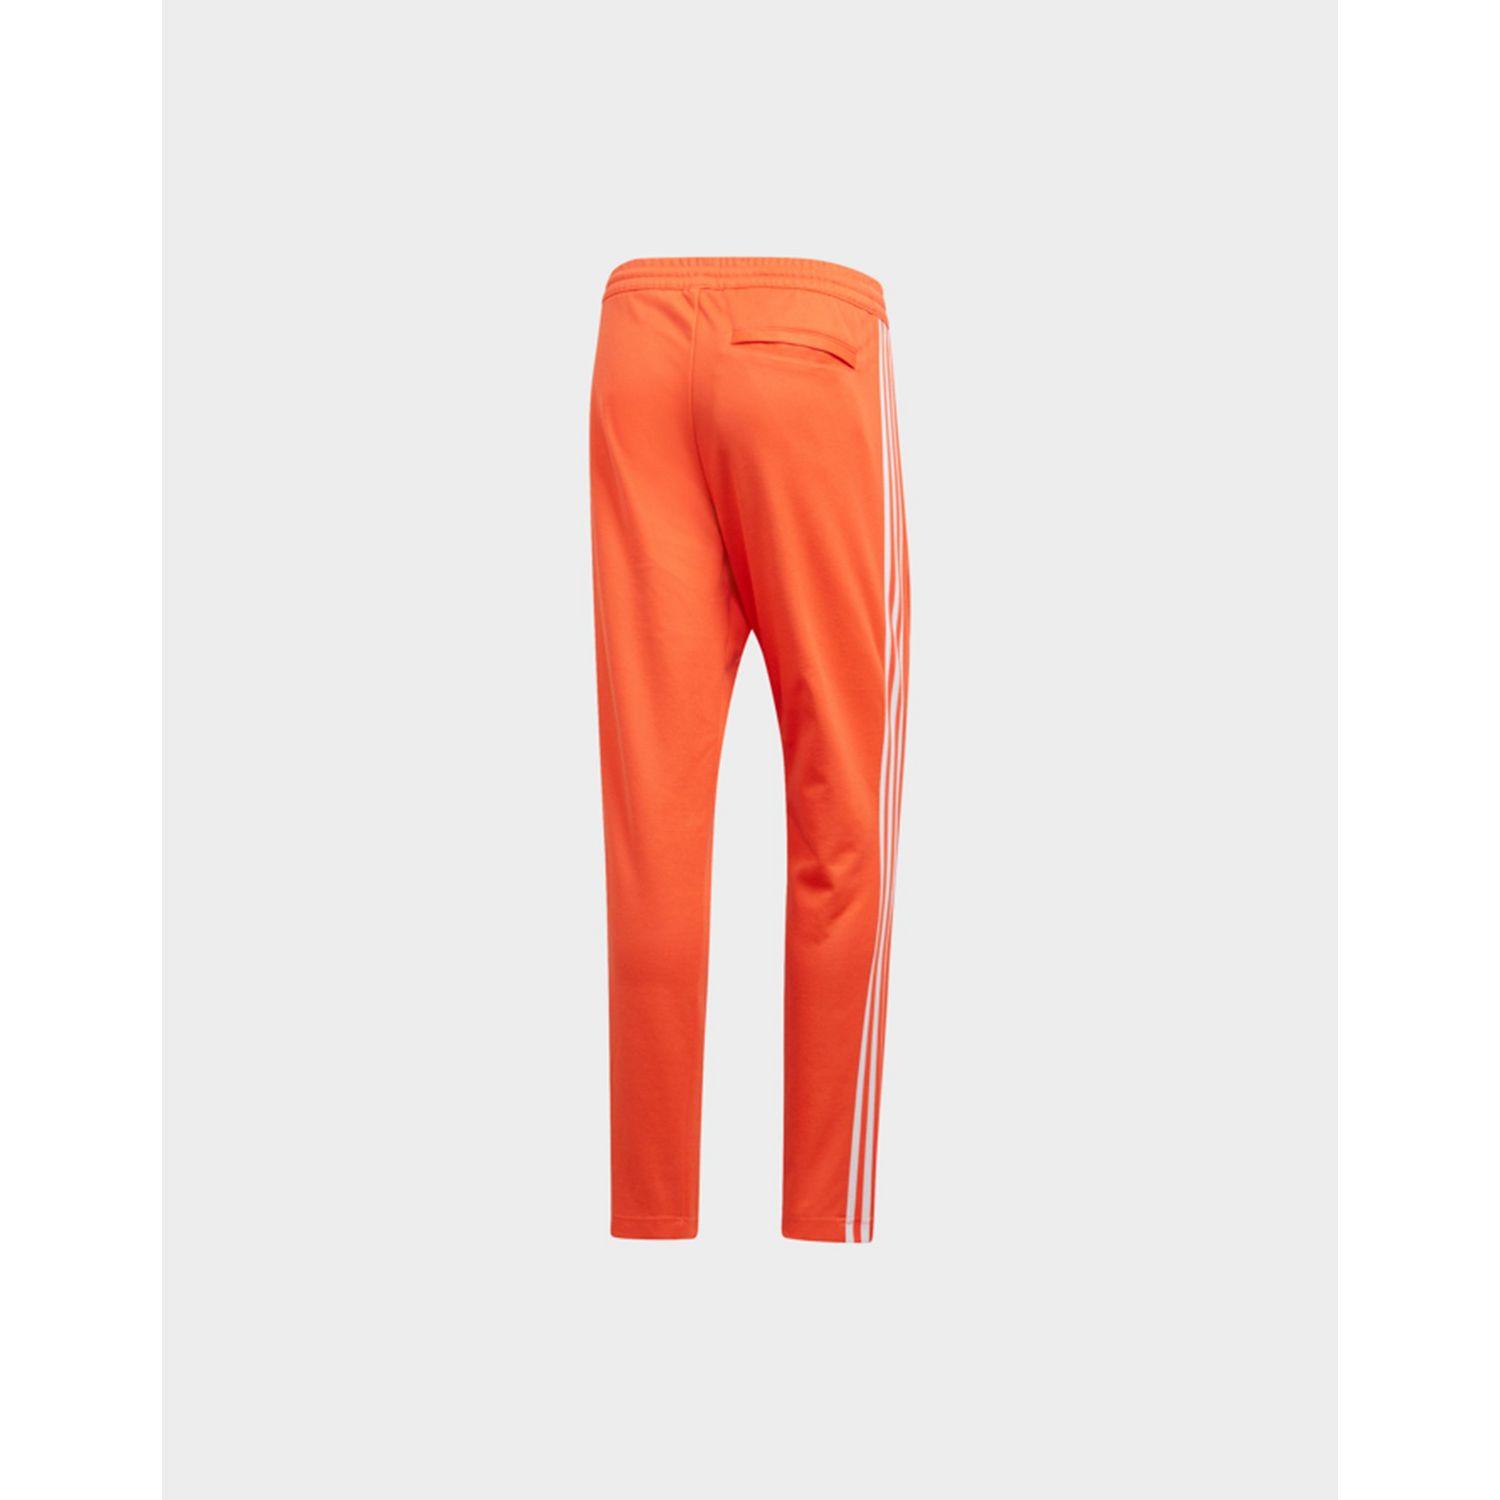 bb track pants orange